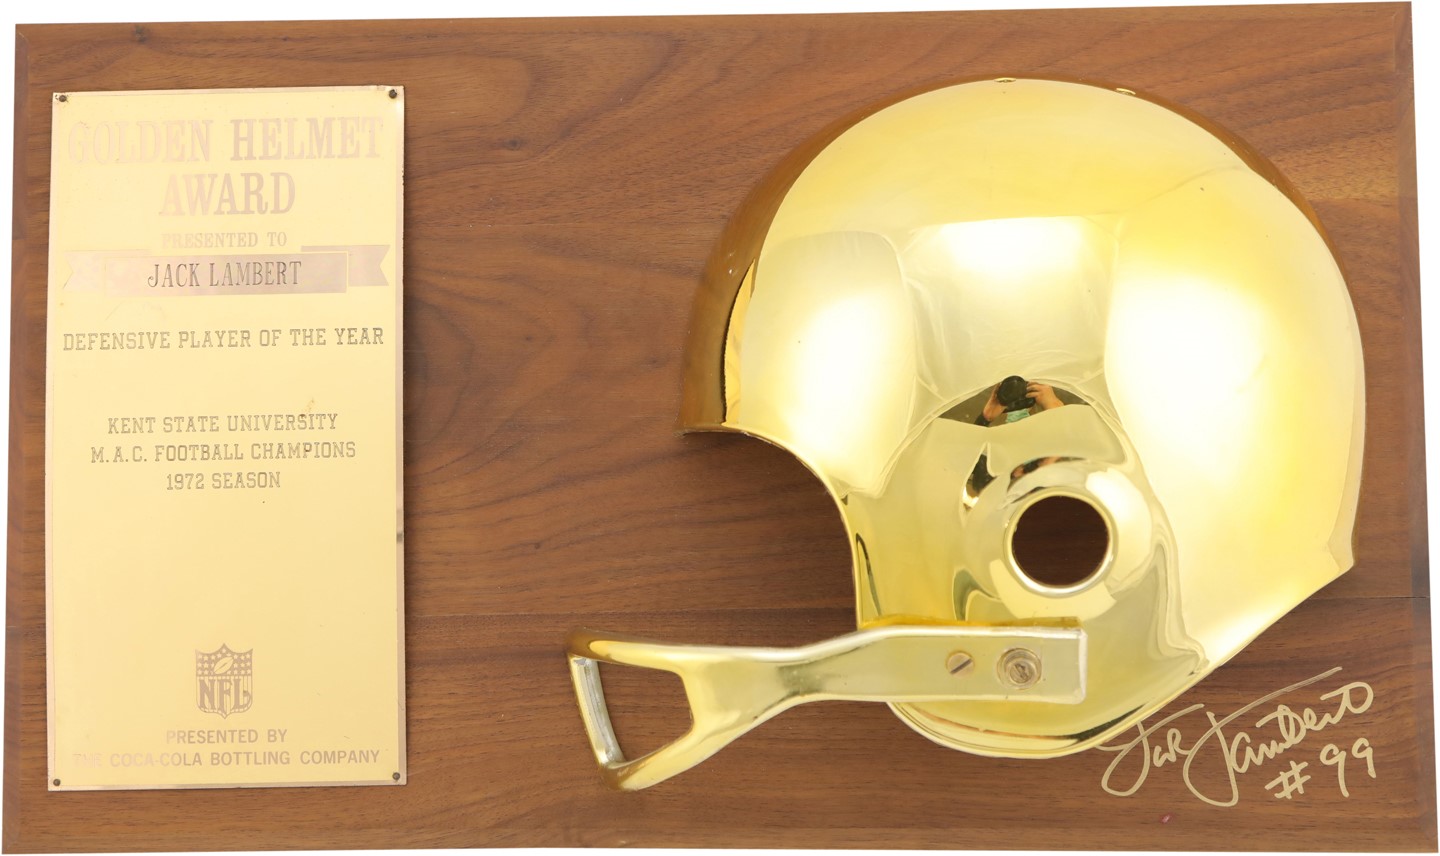 The Jack Lambert Collection - 1972 Jack Lambert Kent State Defensive Player of the Year Golden Helmet Award